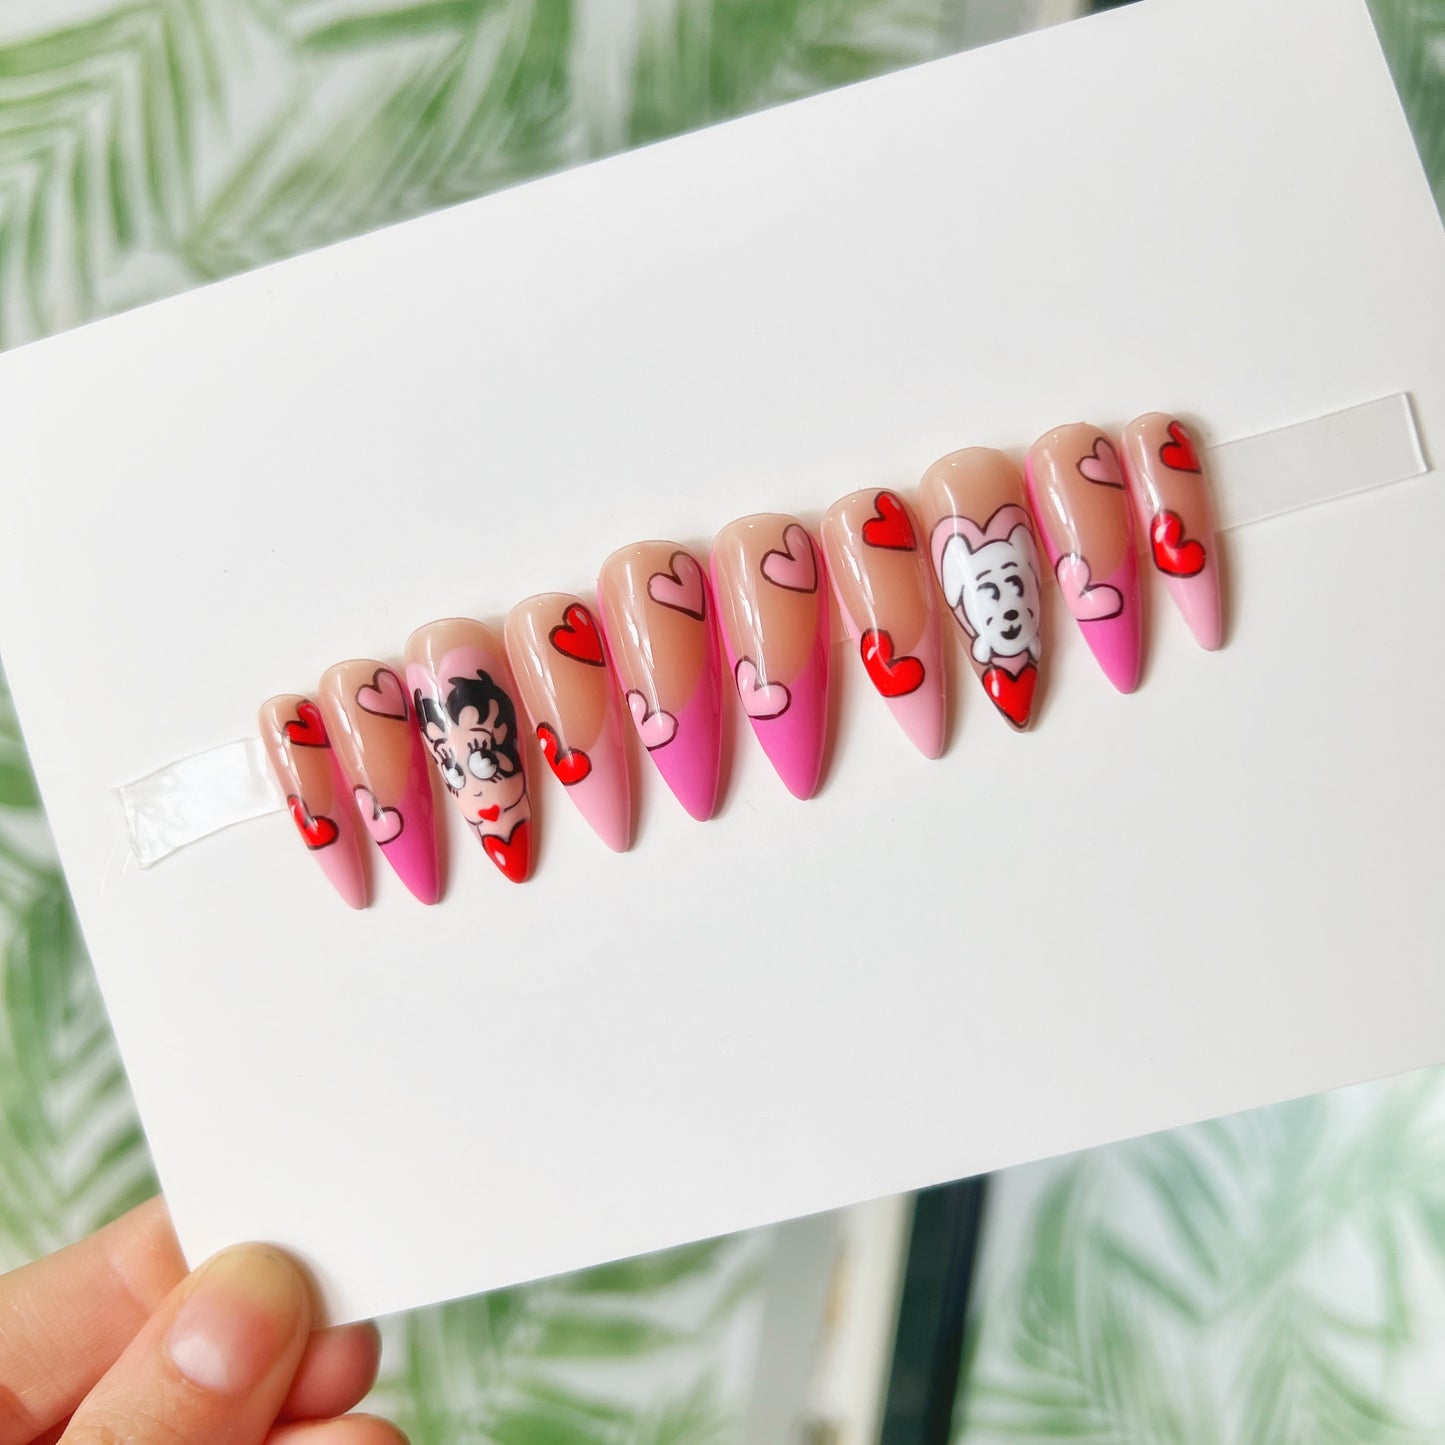 Betty Boop Acrylic Press on nails